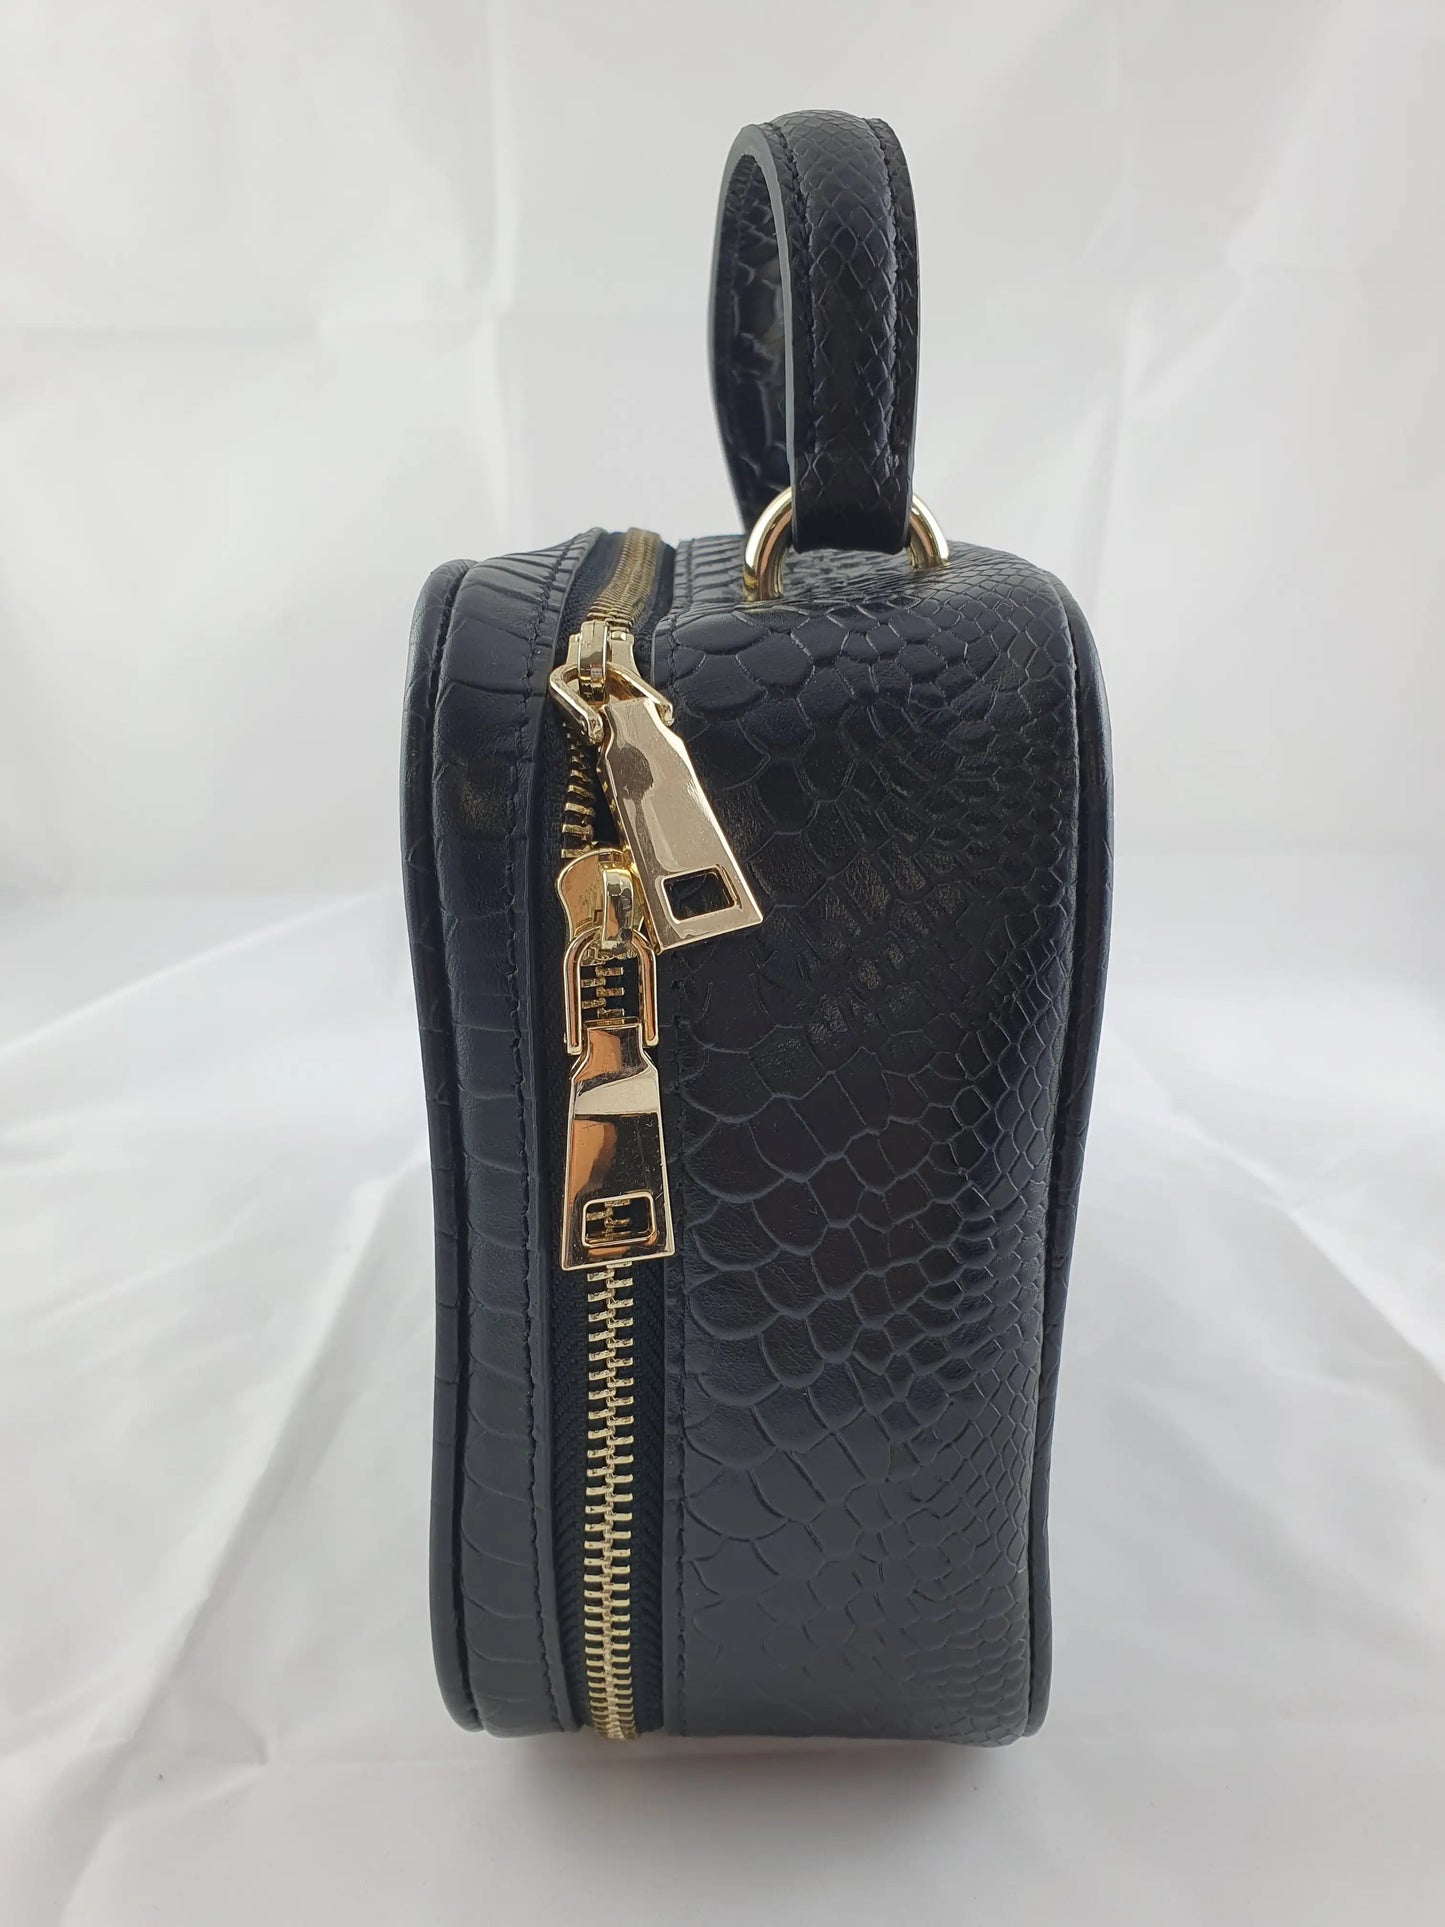 Mon Purse Square Snakeskin Pattern Handbag by SwapUp-Second Hand Shop-Thrift Store-Op Shop 